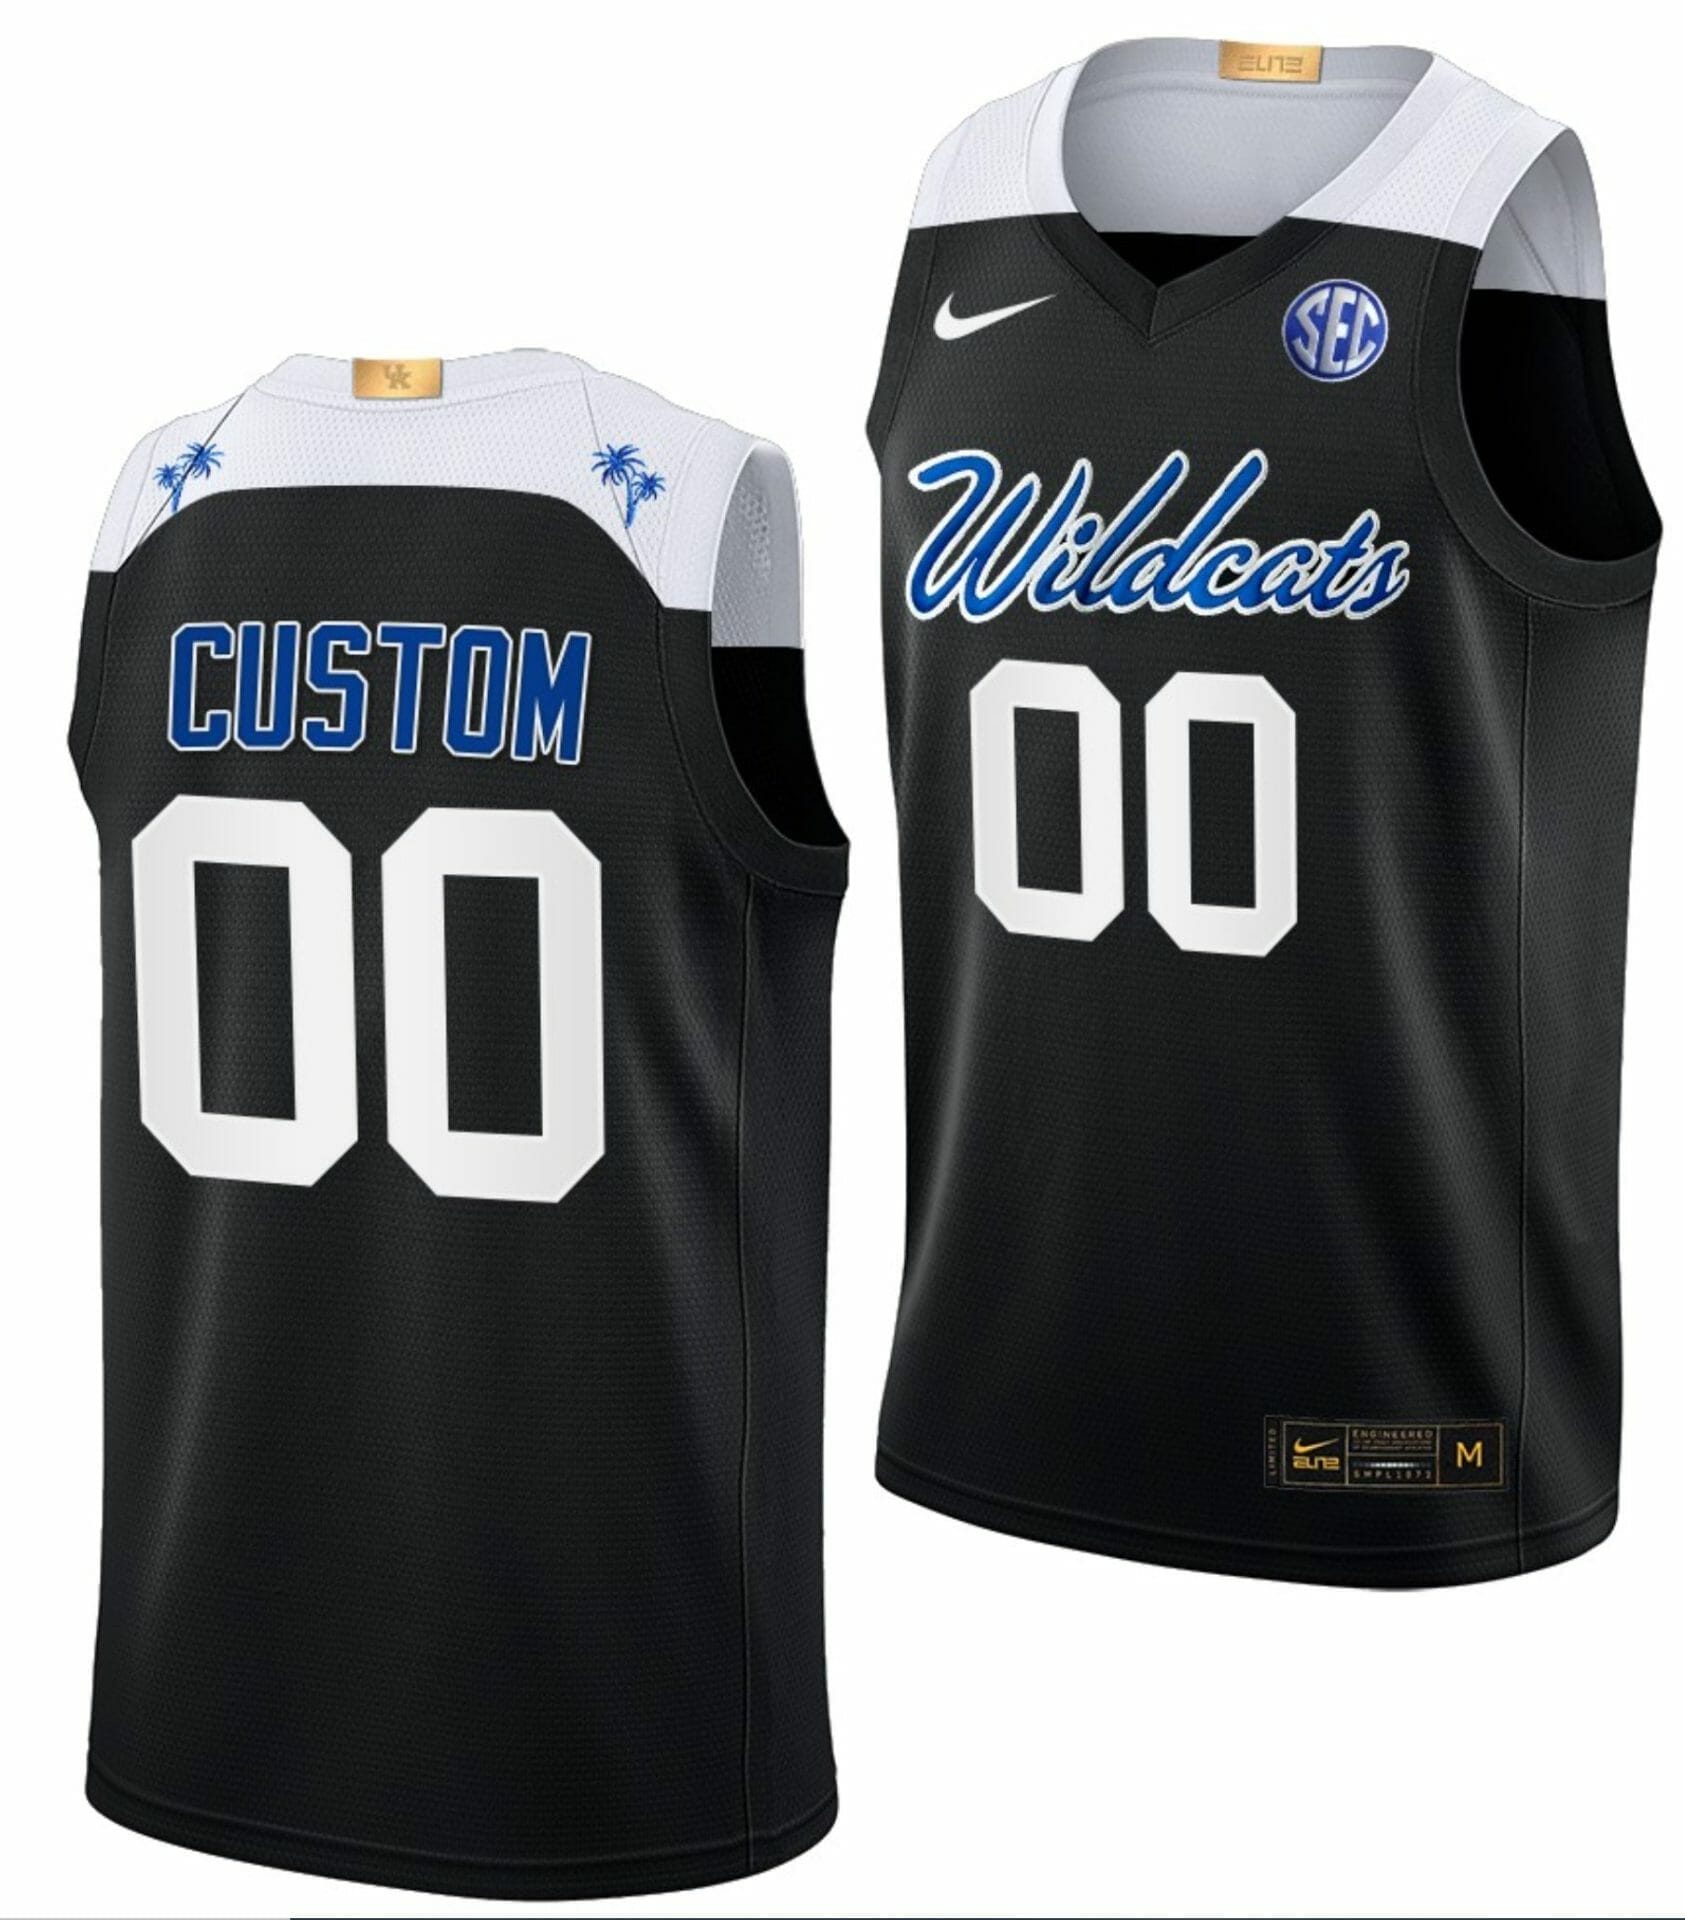 Men's Nike Richard Hamilton White UConn Huskies Replica Basketball Jersey